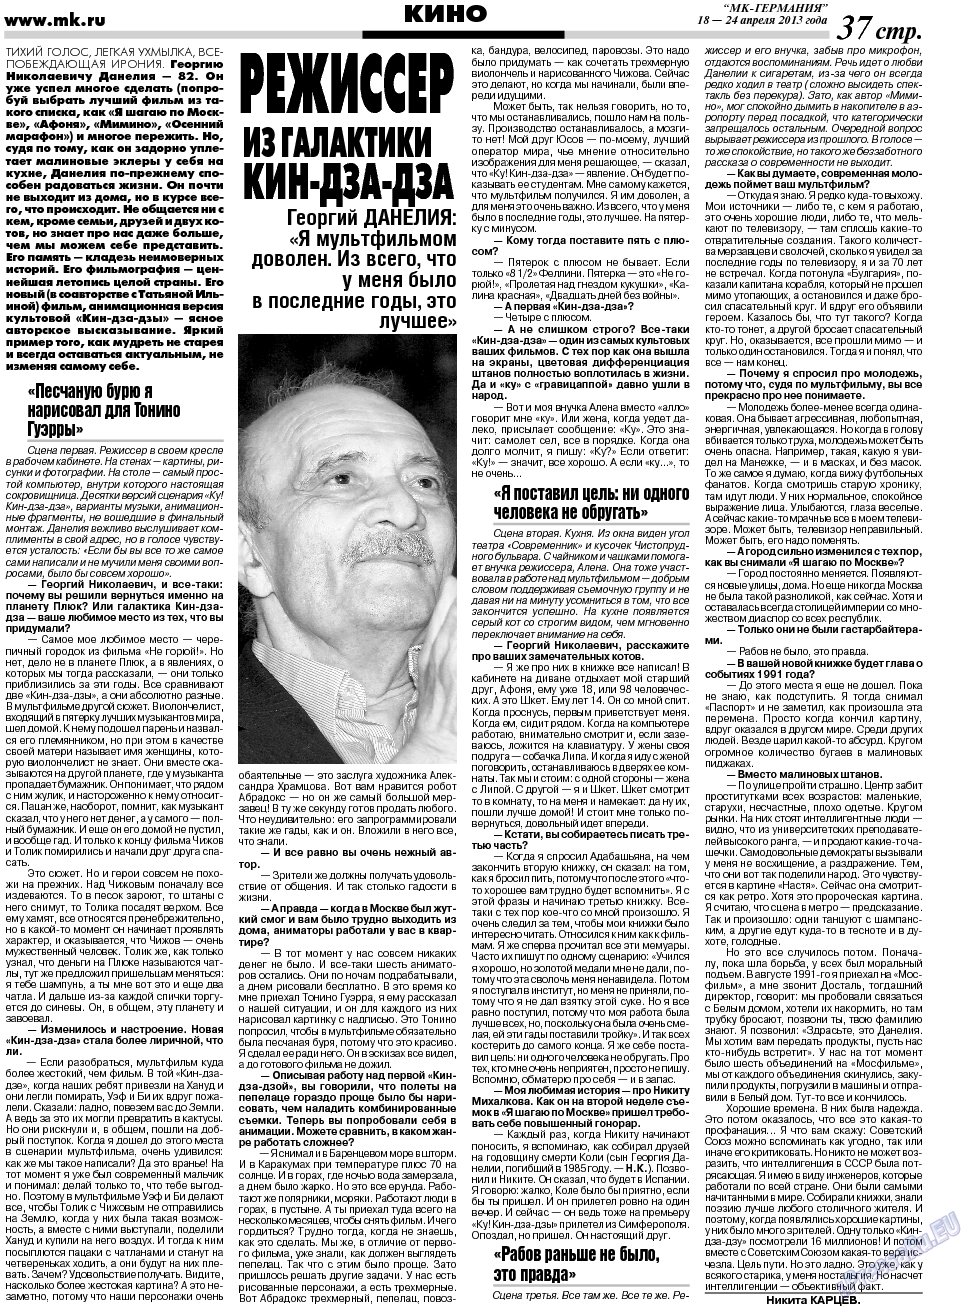 МК-Германия, газета. 2013 №16 стр.37